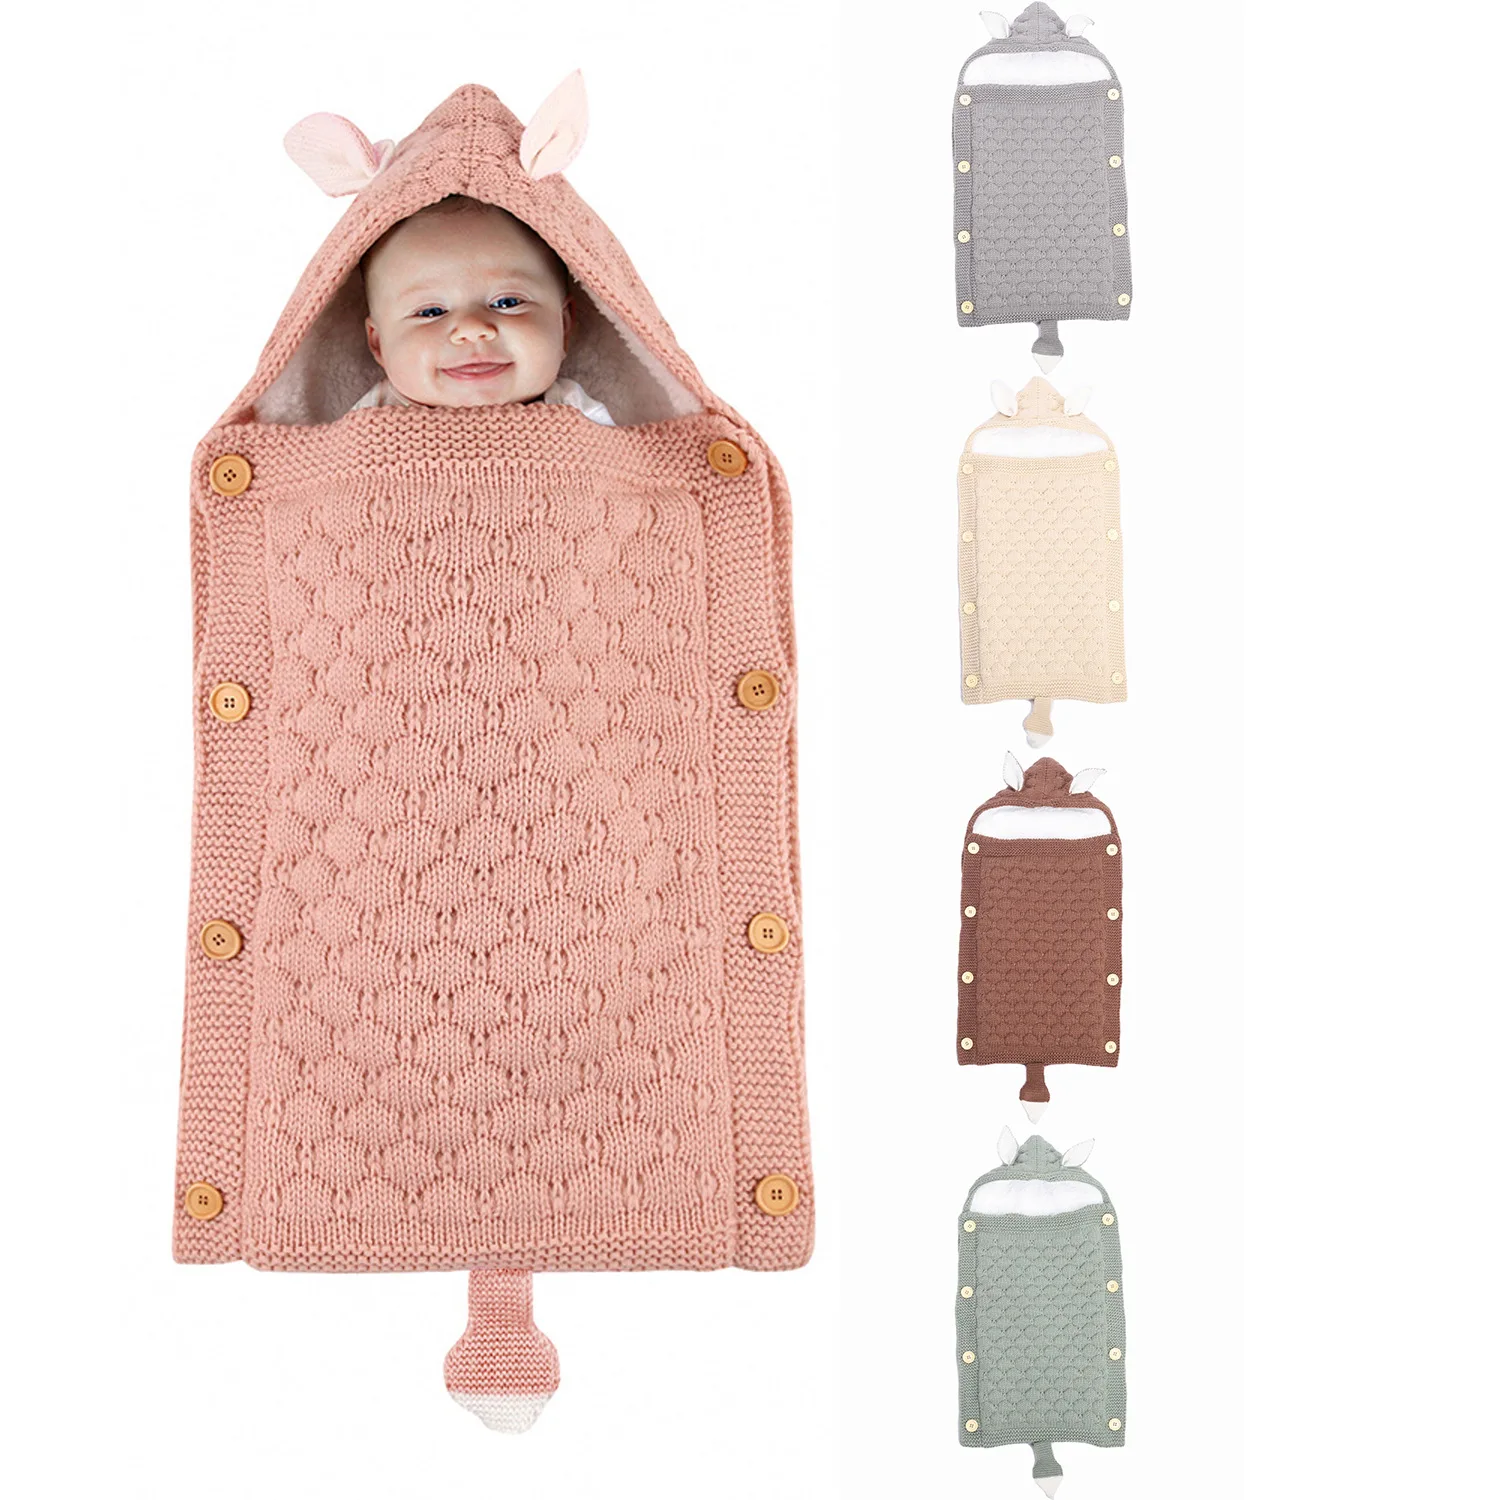 Hot Sale Newborn Knitting Pattern Kick Proof Quilt Wrap Swaddle Blanket Baby Sleeping Bag Baby Knitted Rabbit Ear Sleeping Bag